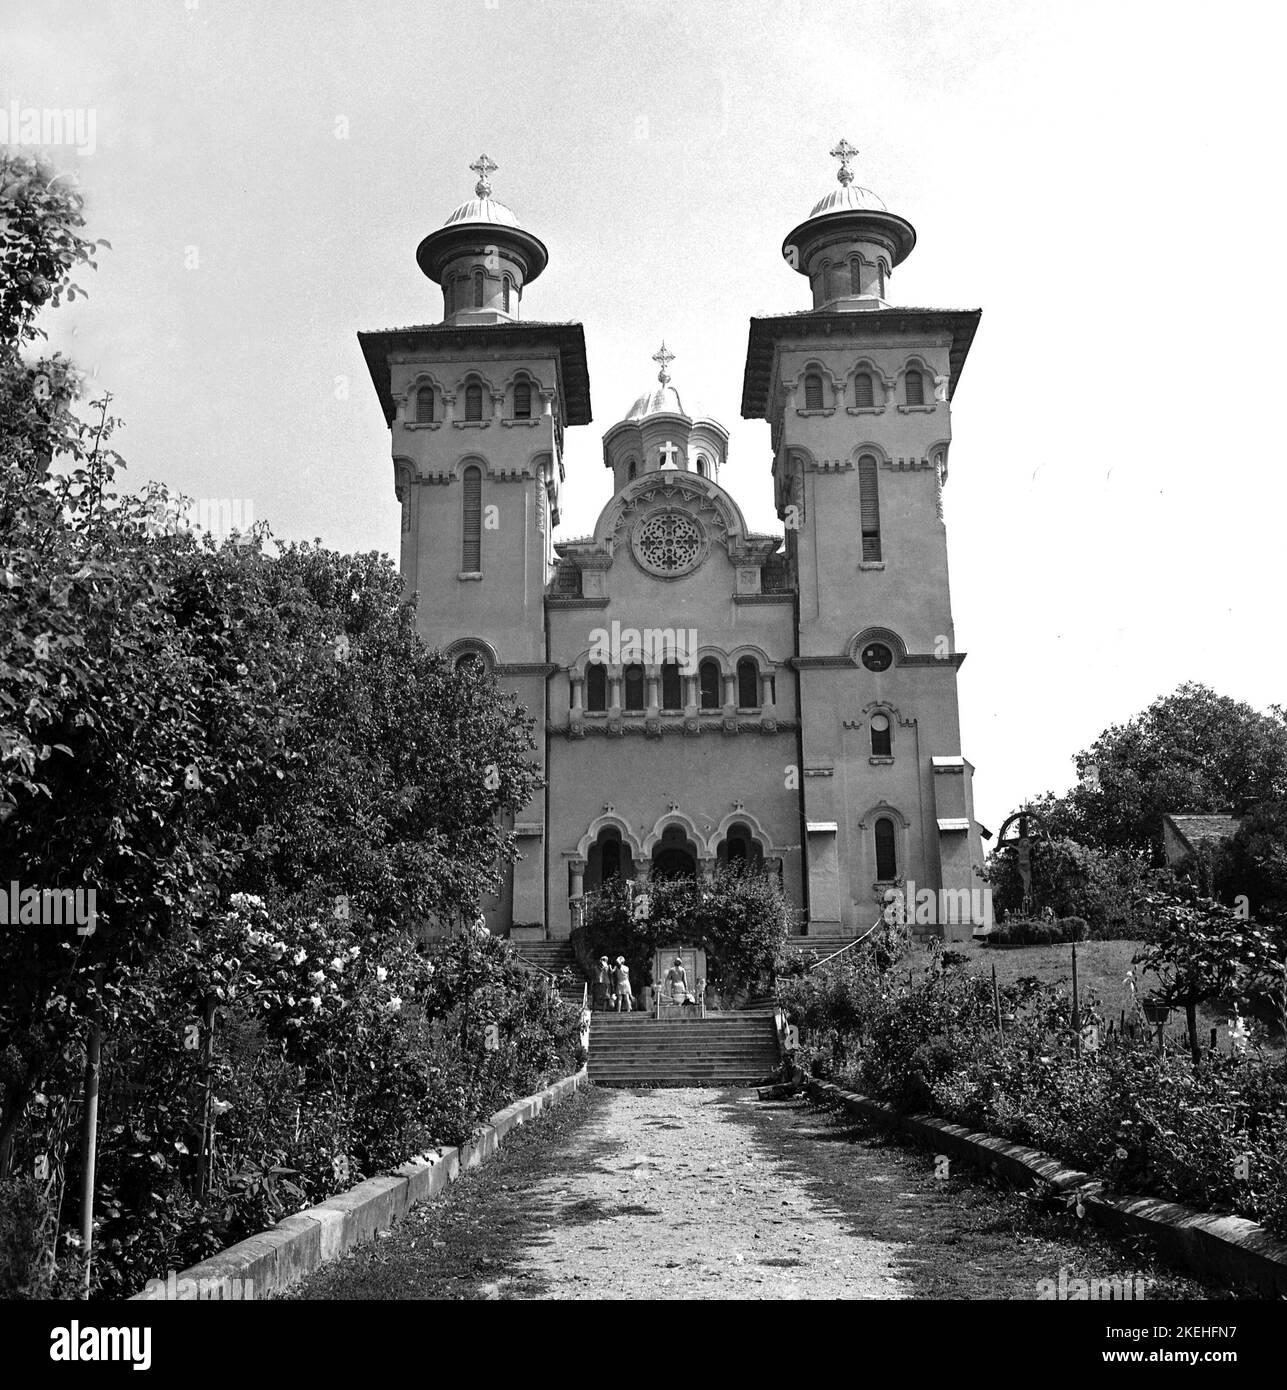 Zalău, Salaj County, Romania, approx. 1978. The Assumption Cathedral (Dormition of the Theotokos Church). Stock Photo